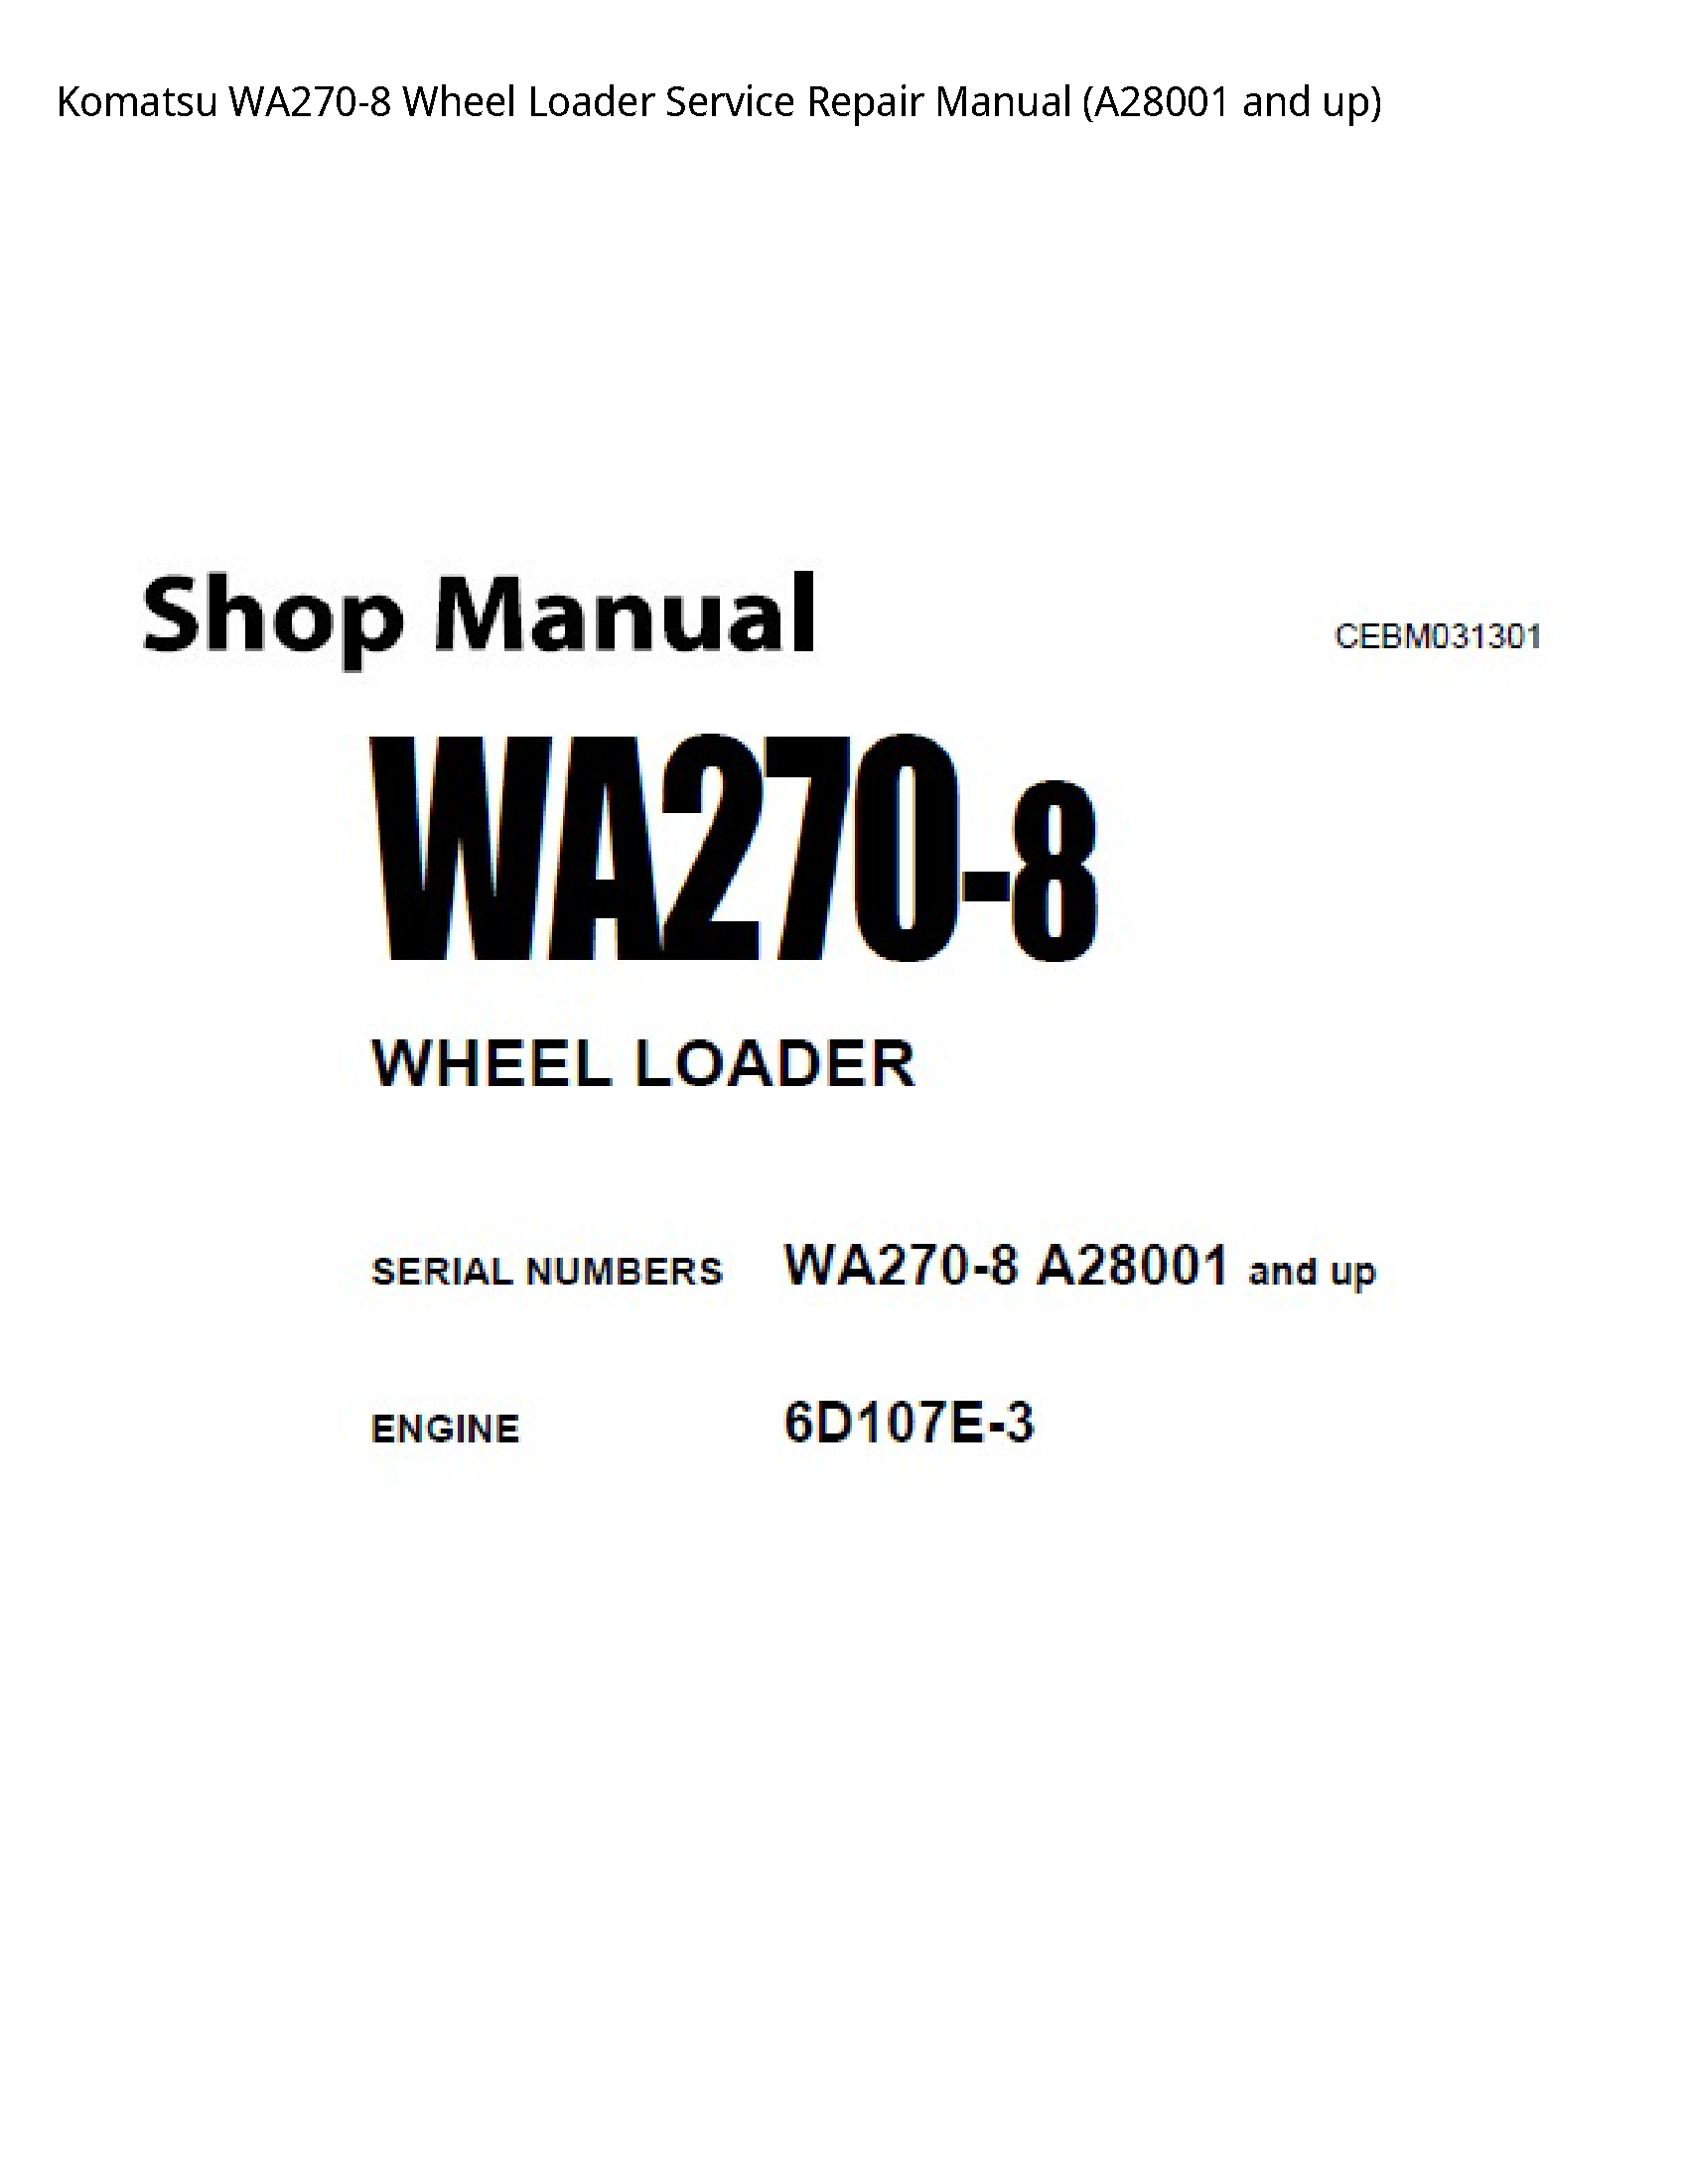 KOMATSU WA270-8 Wheel Loader manual